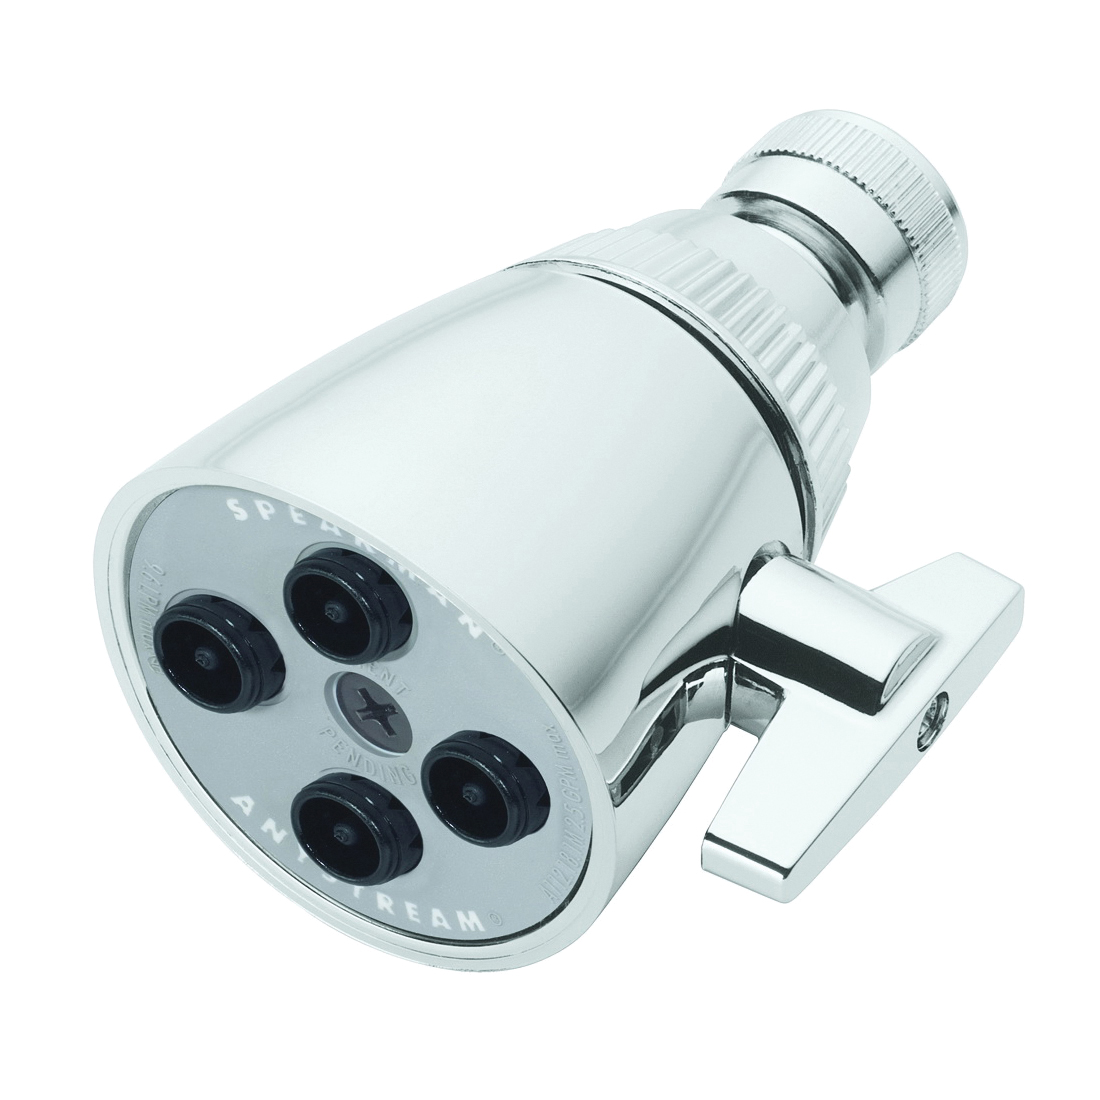 Speakman® S-2253-E175 Classic™ Multi-Function Shower Head, 1.75 gpm Min, 3 Sprays, Wall Mount, 2-1/4 in Head, Domestic